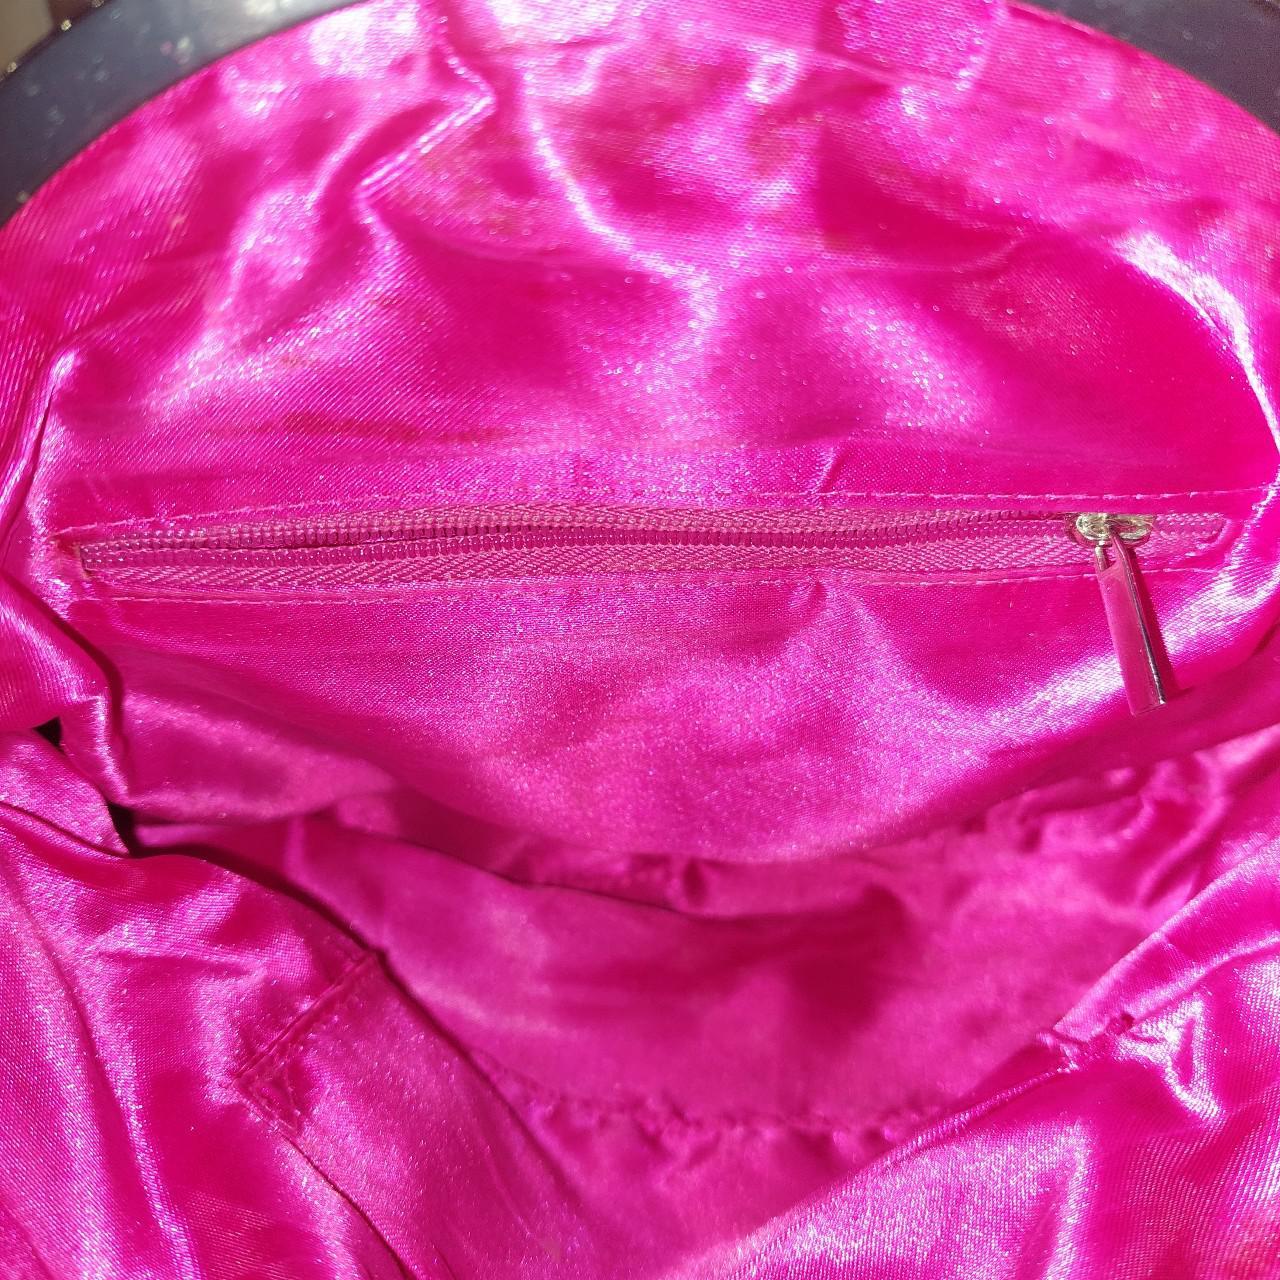 #stunningpinkclutchbag #pinkoccassionbag - Depop